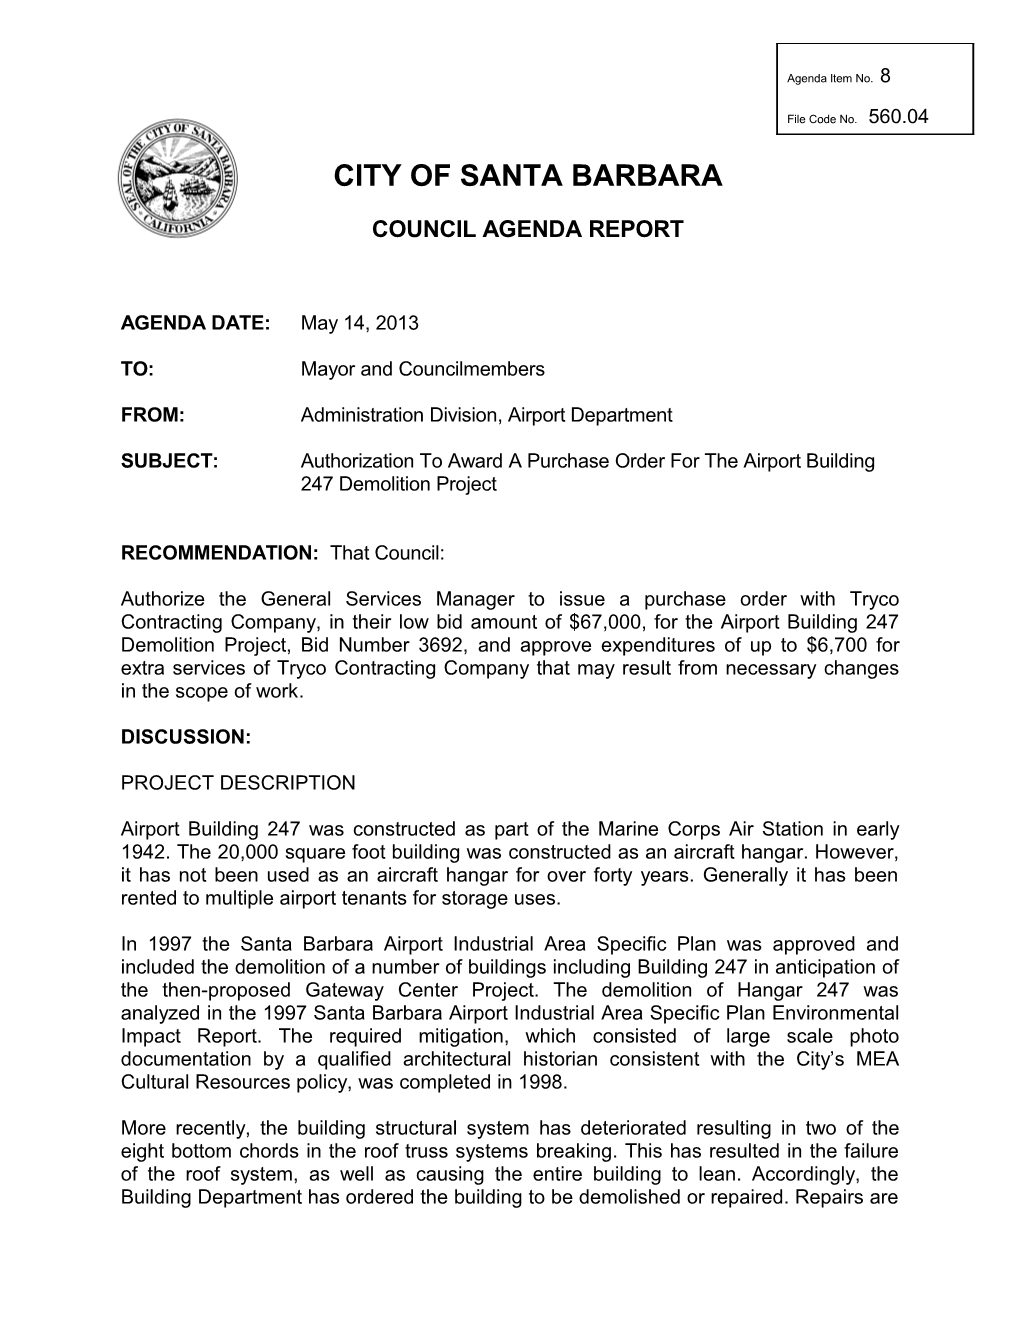 City of Santa Barbara s30